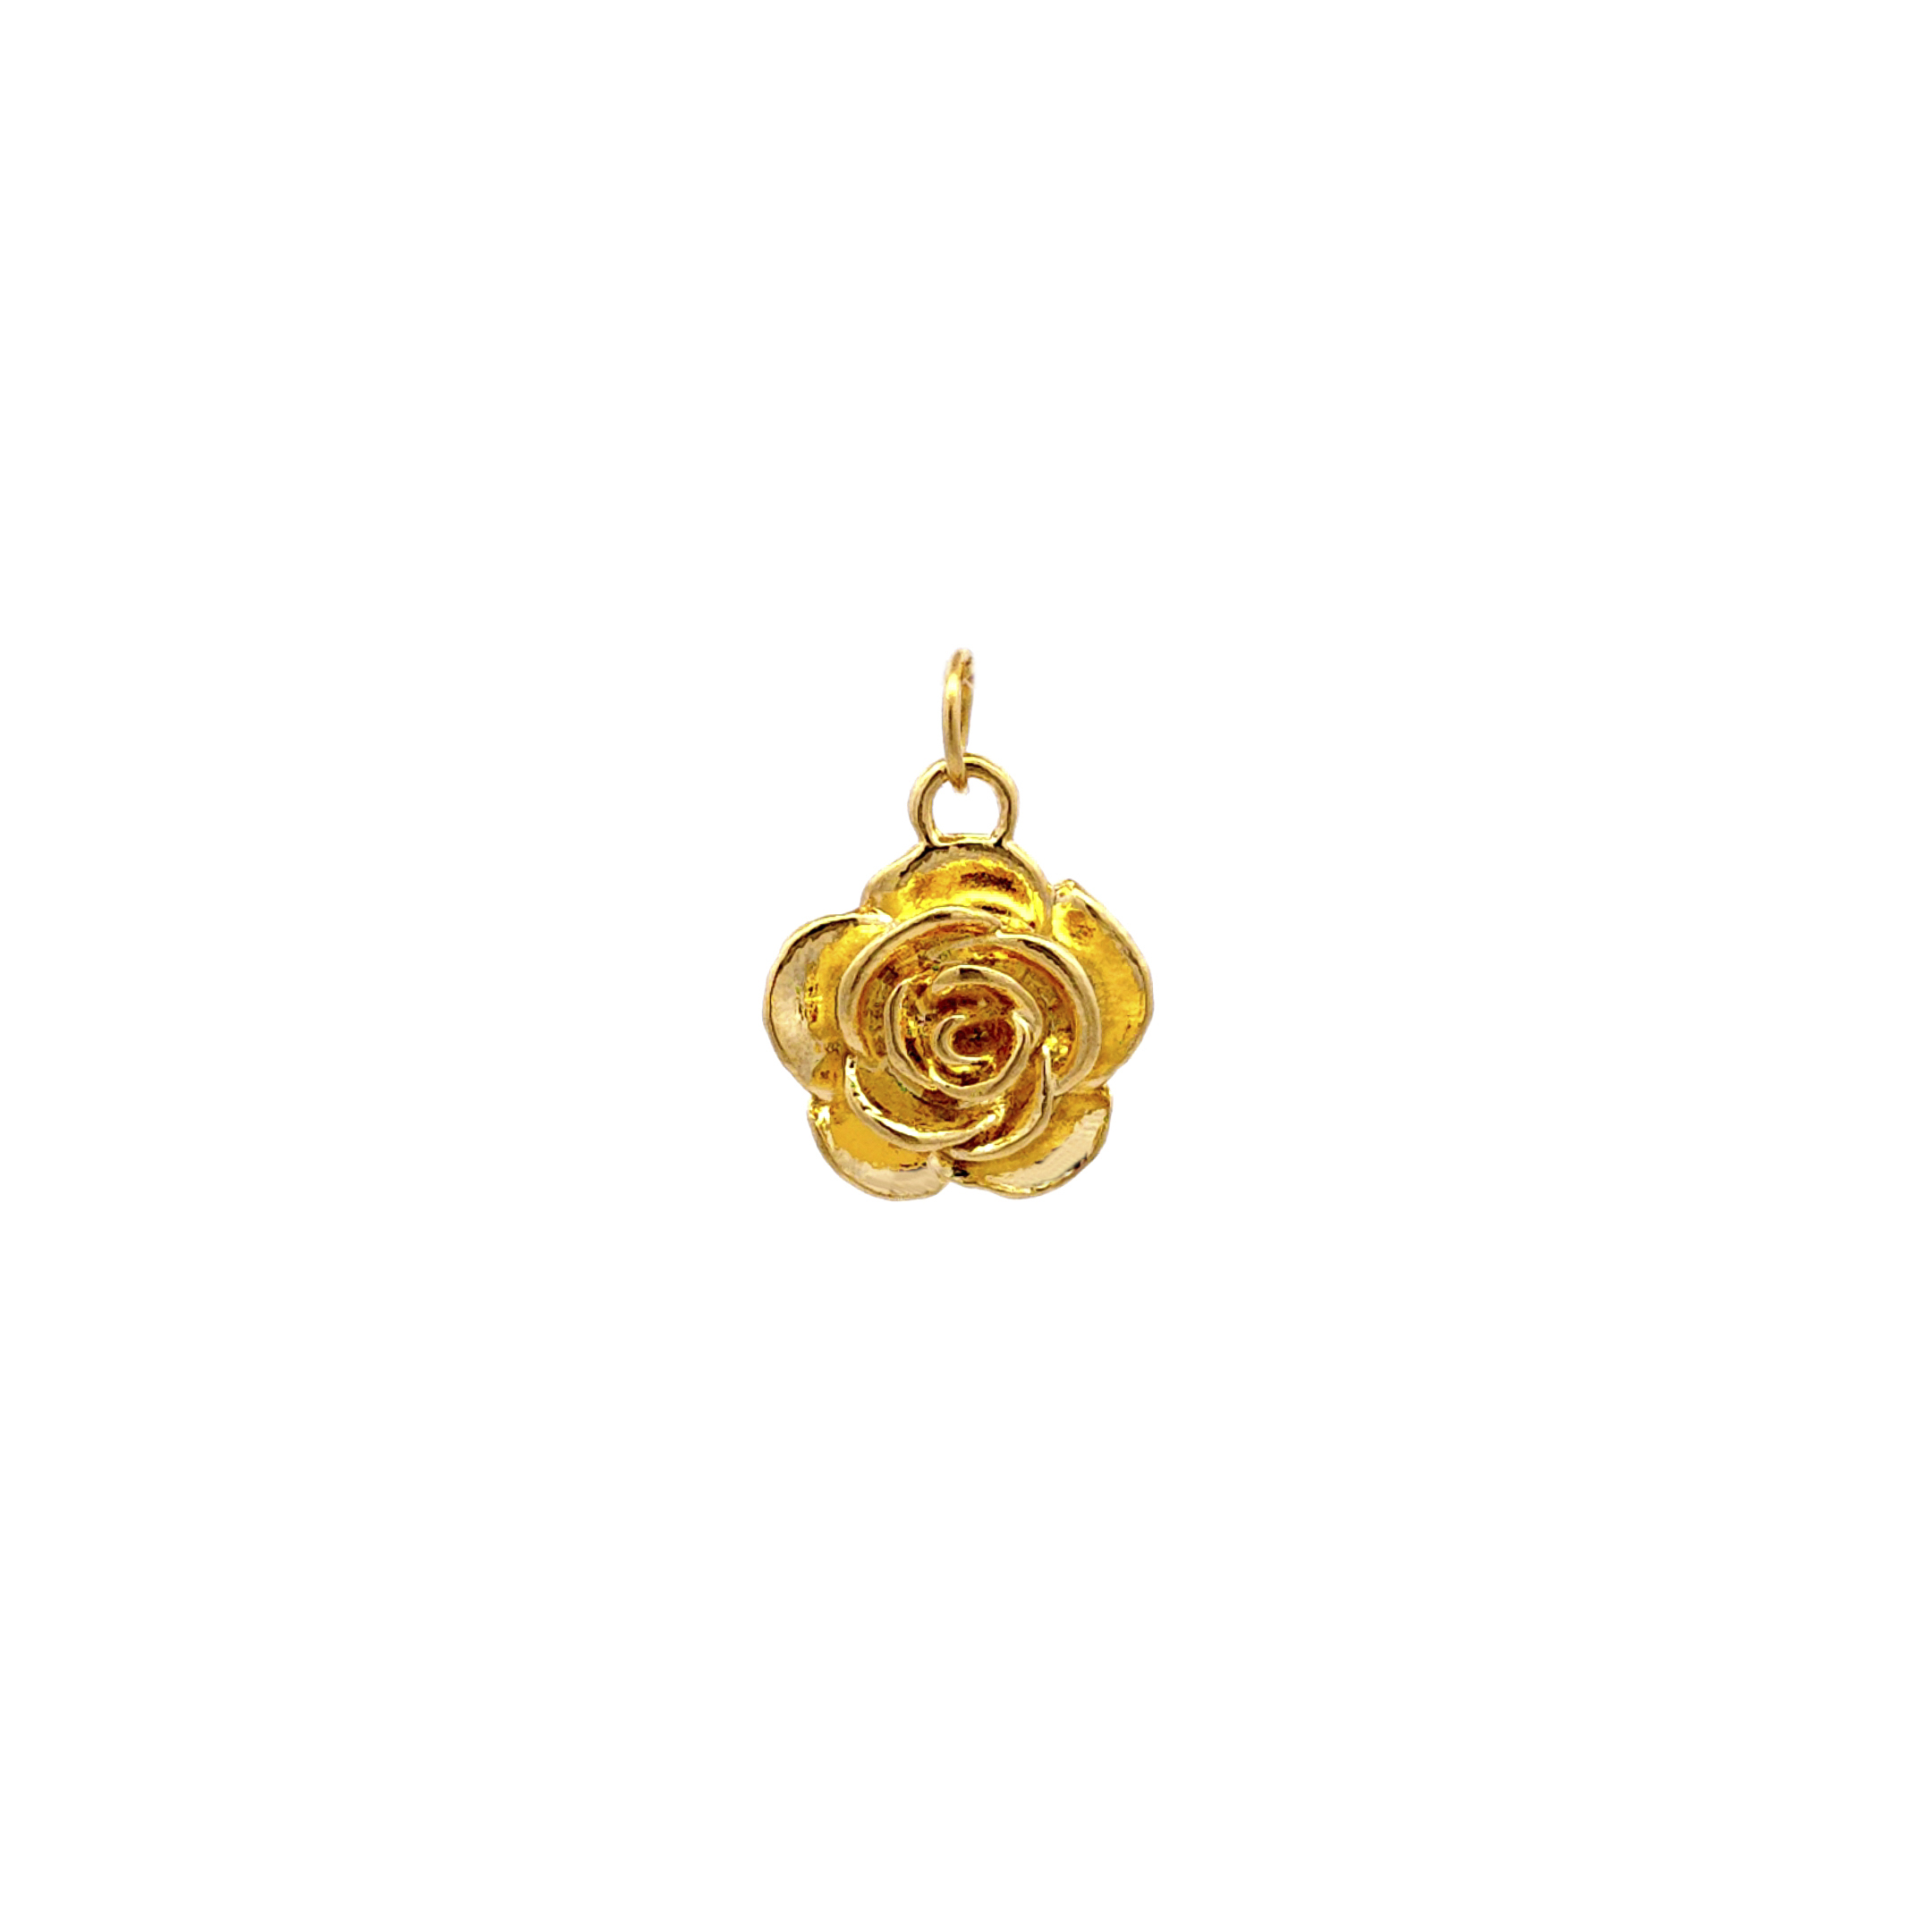 TIANSI 999(24K) Gold Rose Flower Pendant 立体玫瑰吊坠 Loket Emas